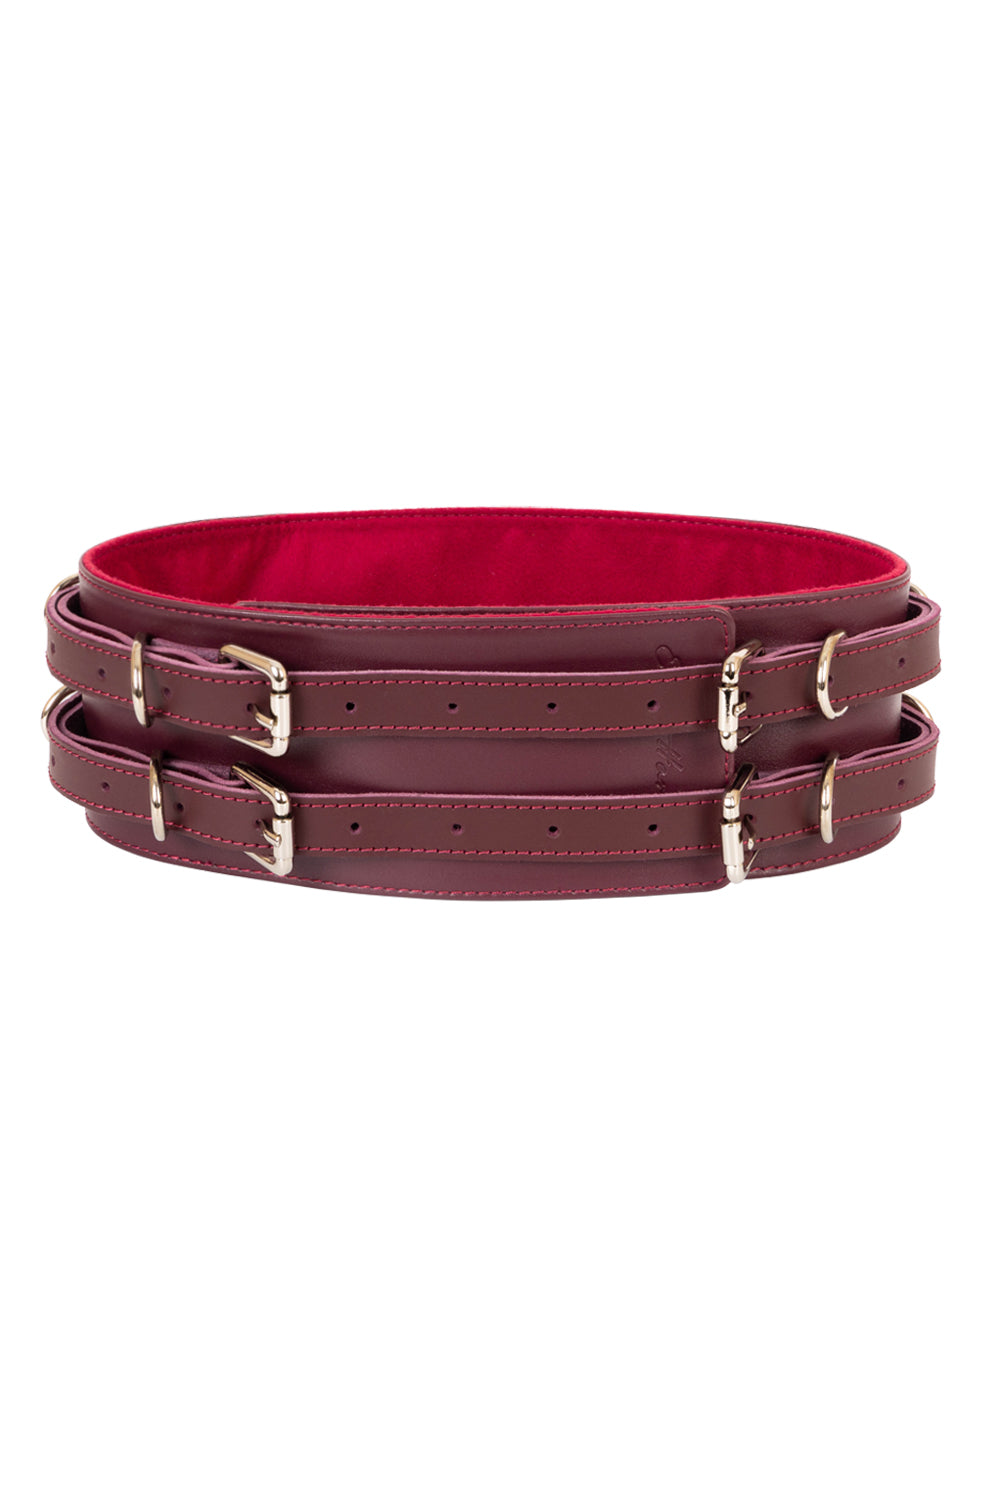 Leather Waist Belt. Red